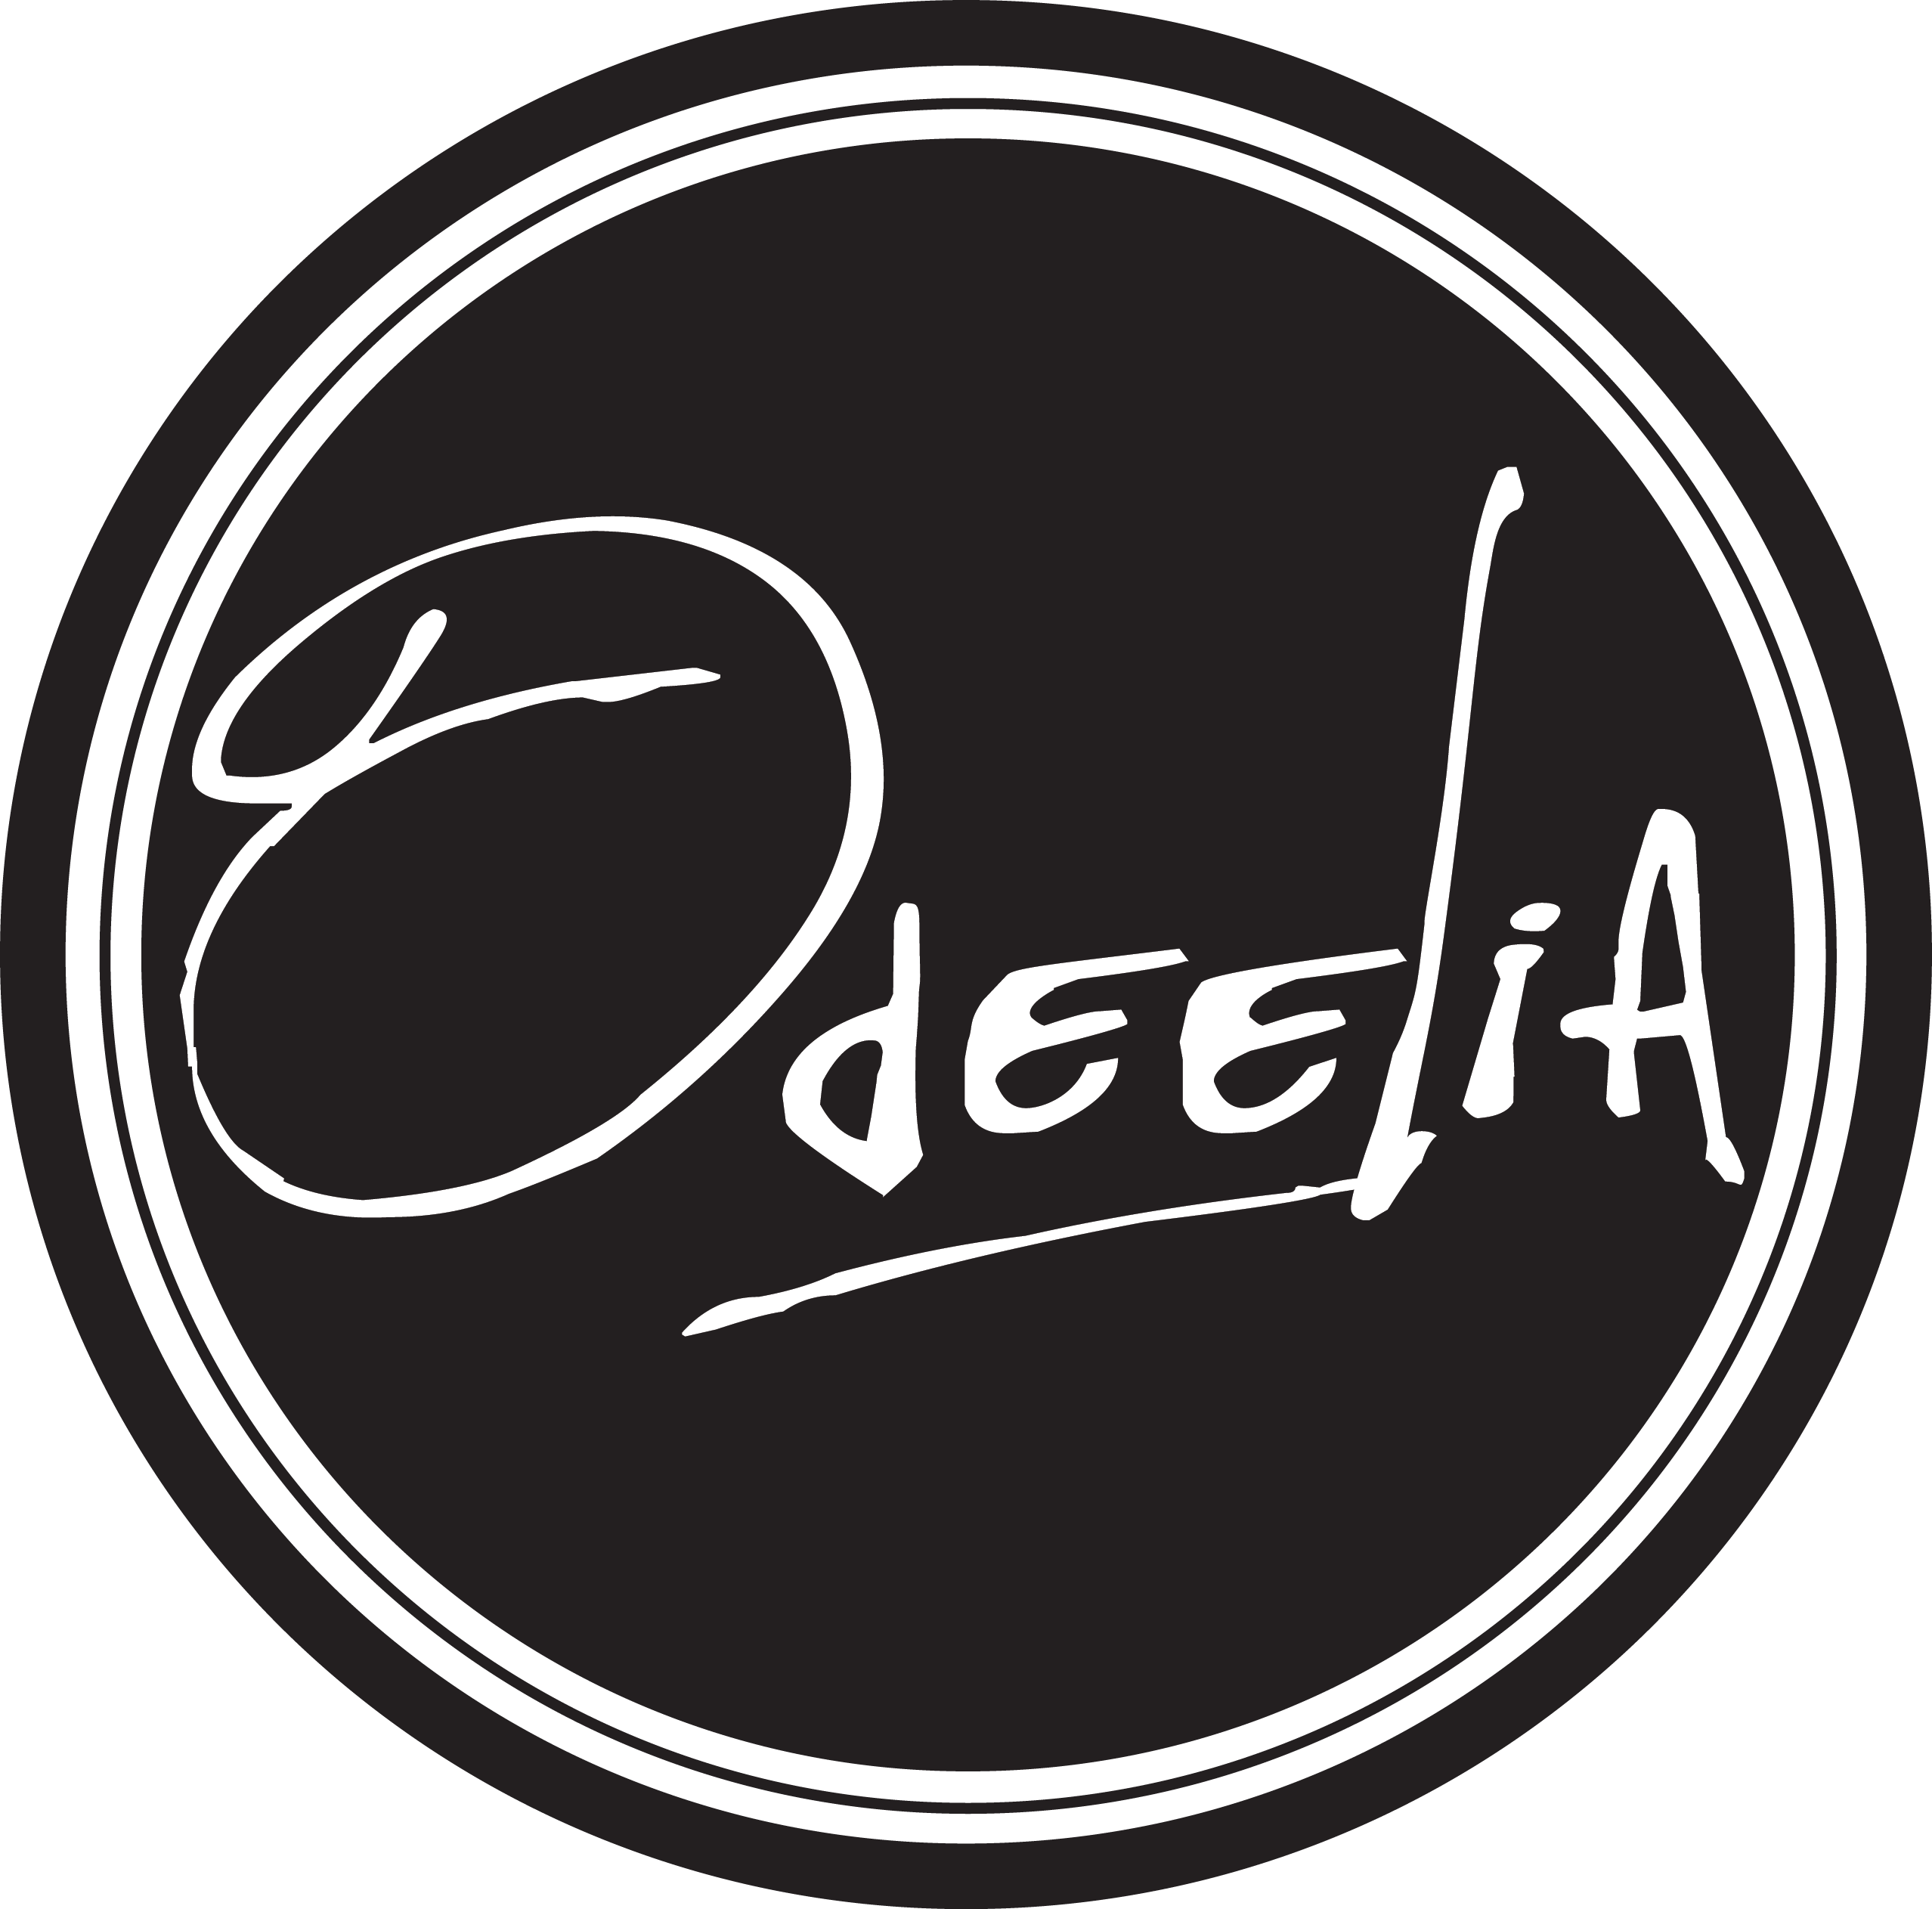 Odeelia